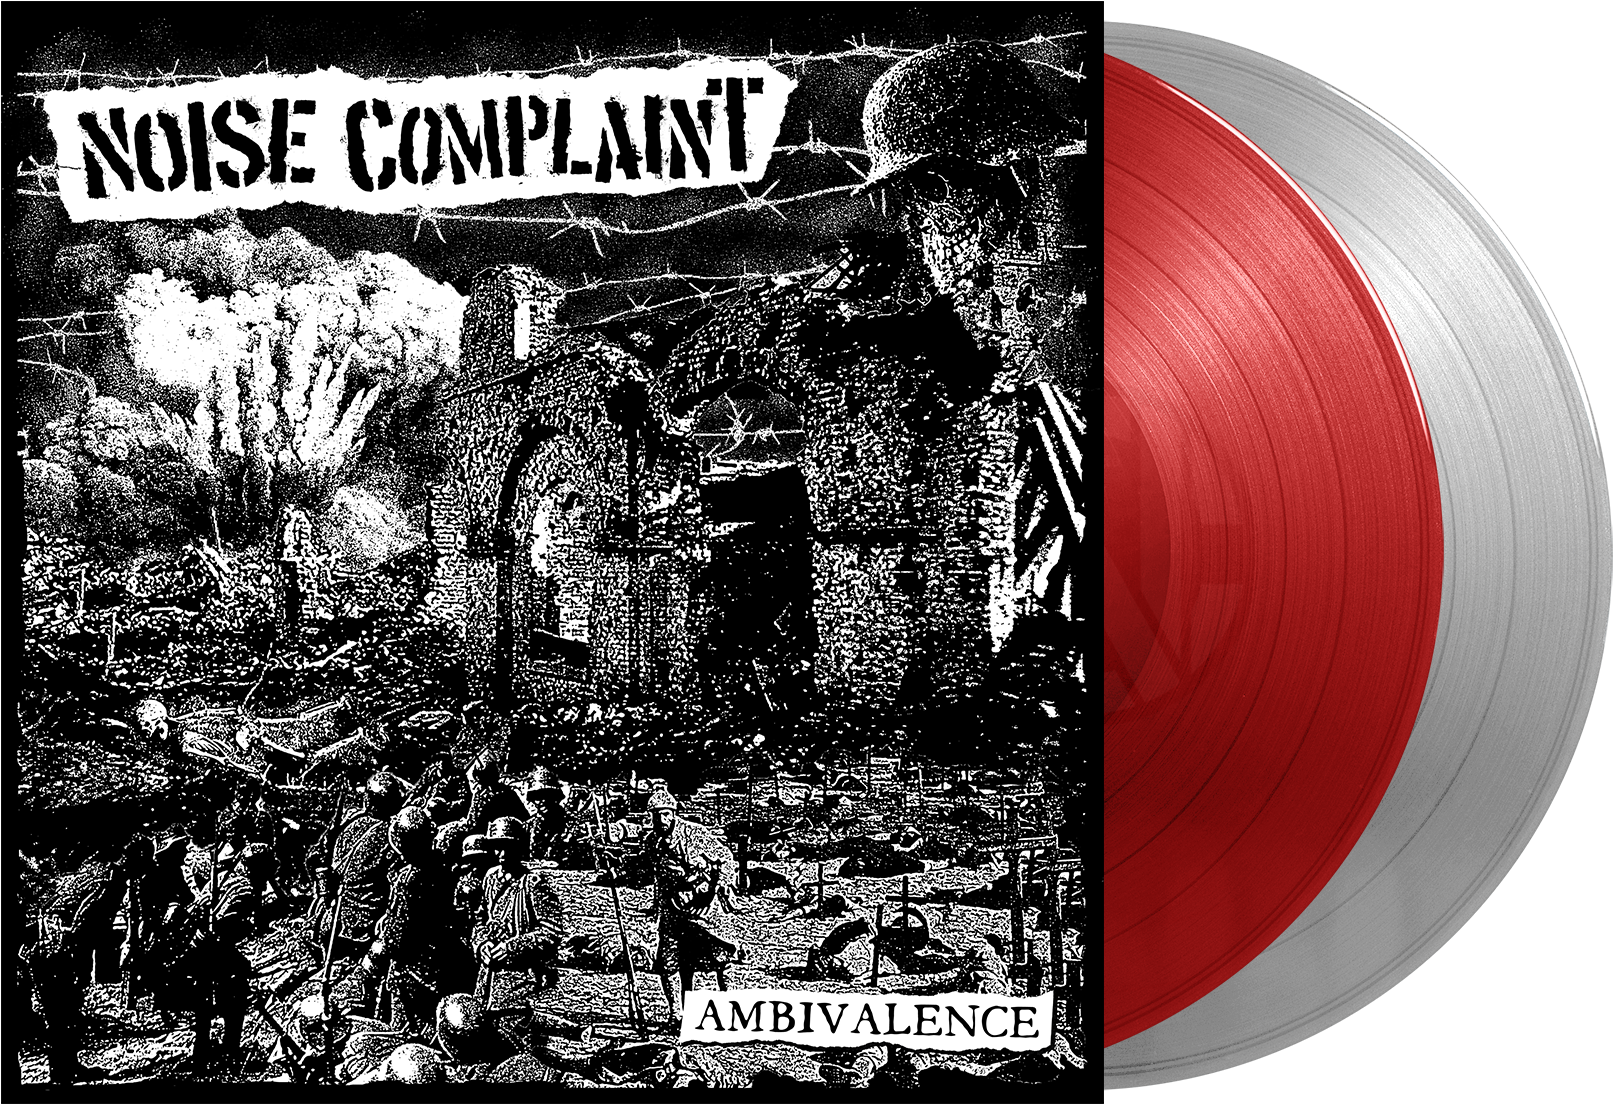 Noise Complaint Ambivalence Vinyl Record PNG image